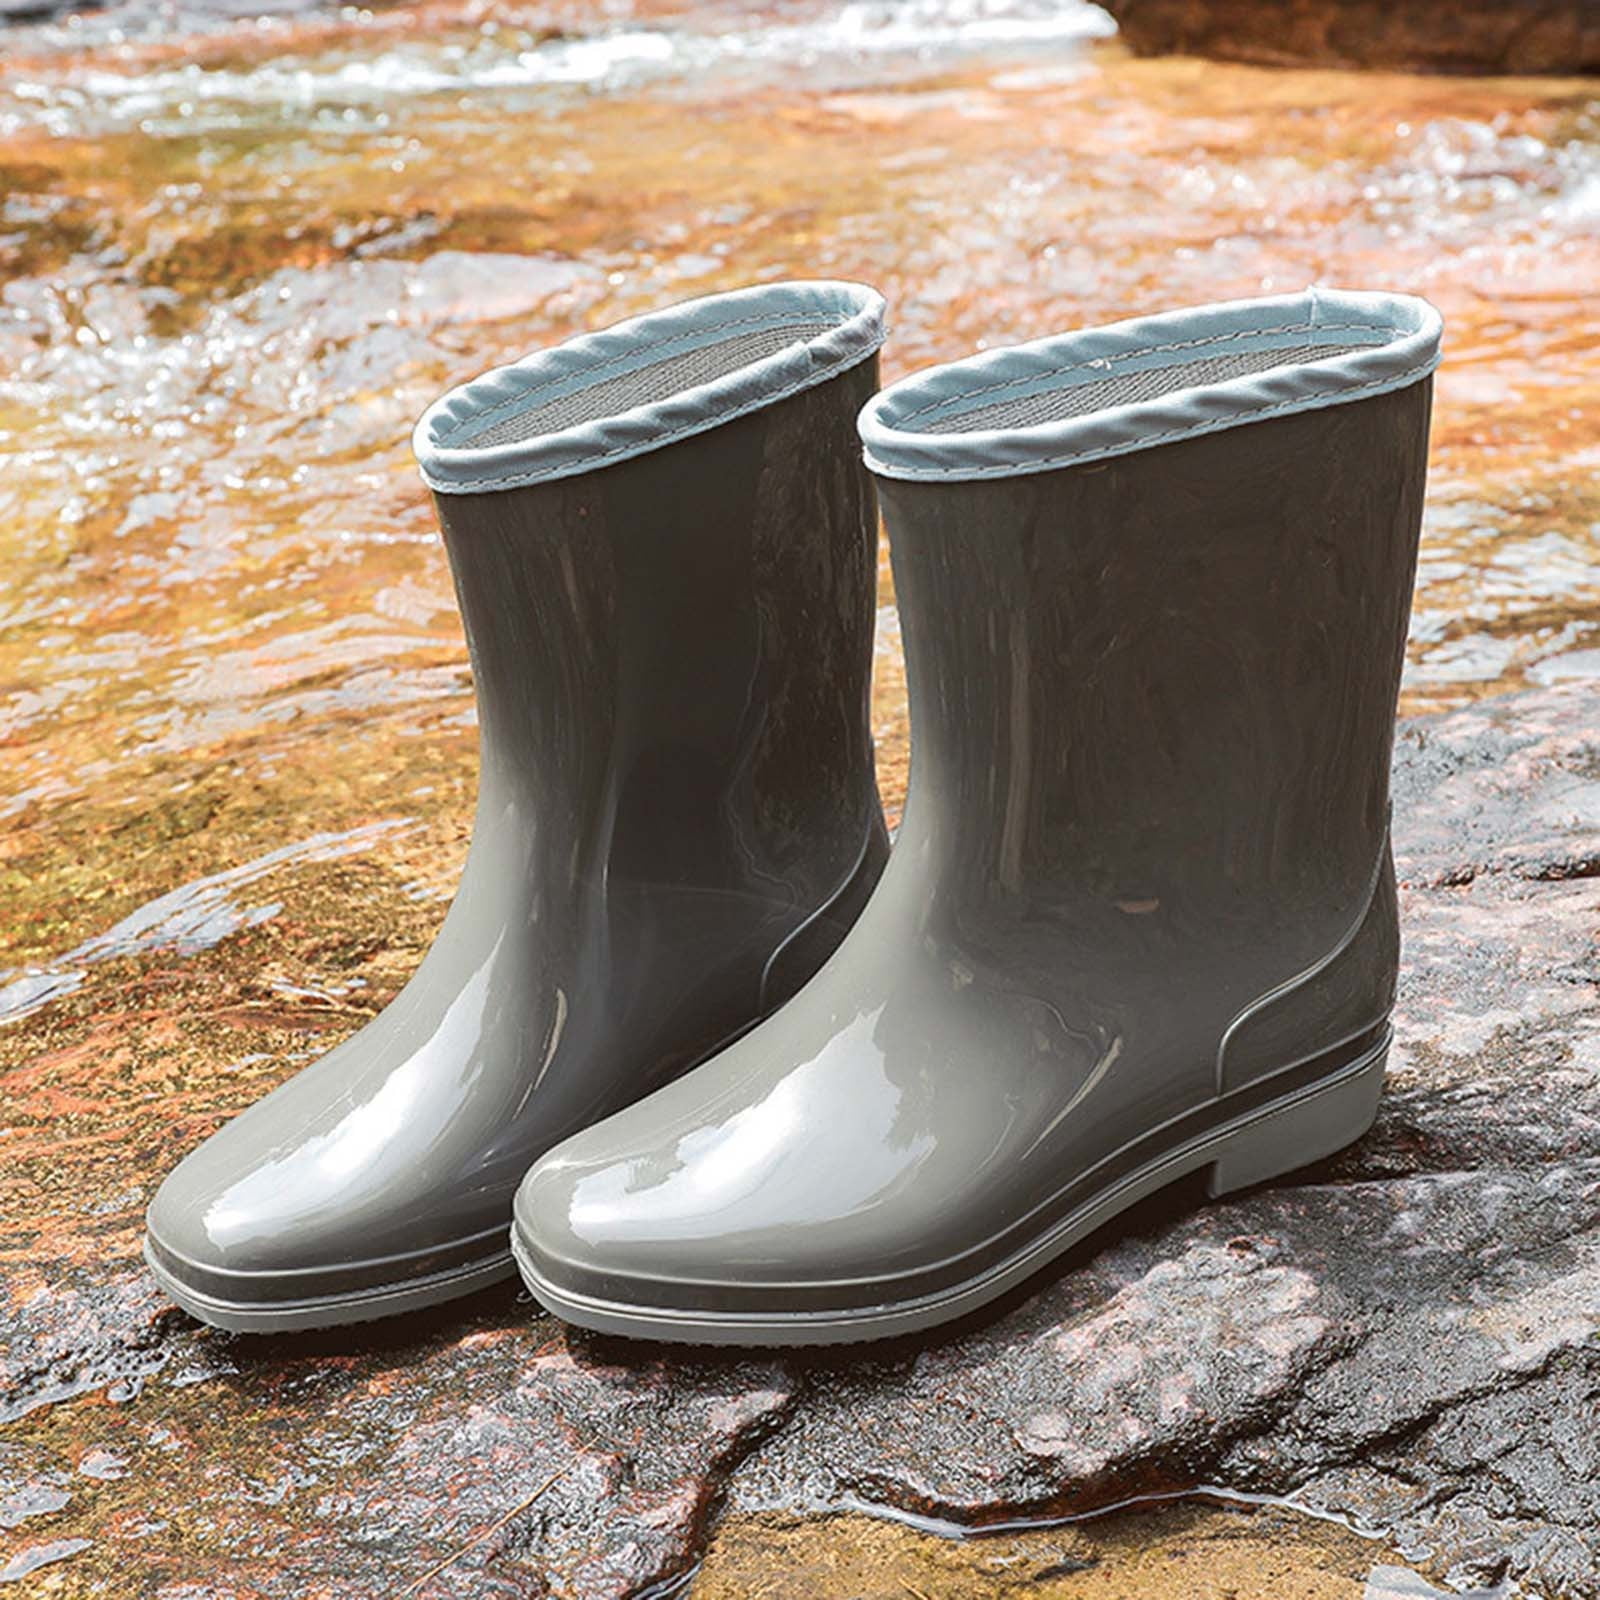 Shldybc Rain Boots Women, Waterproof Fishing Deck Boots, Anti-Slip